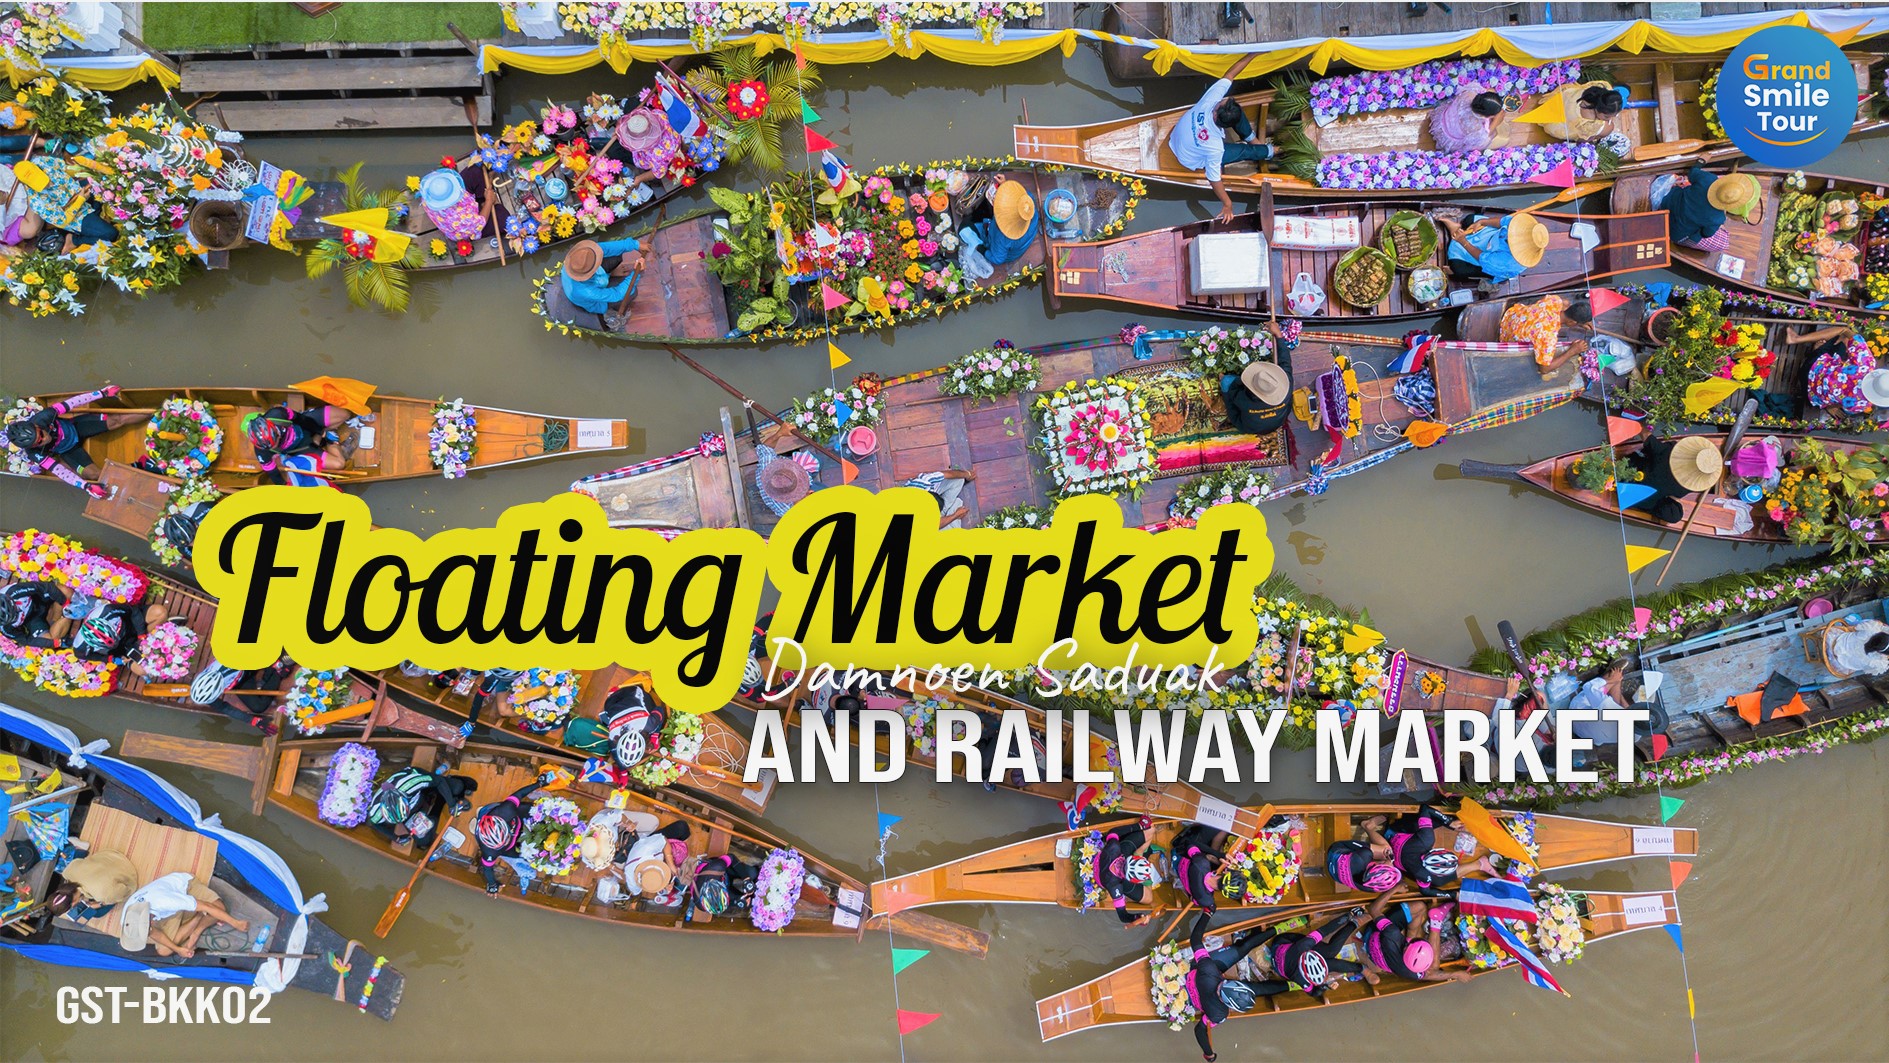 GST-BKK03 Floating Market and Railway Market